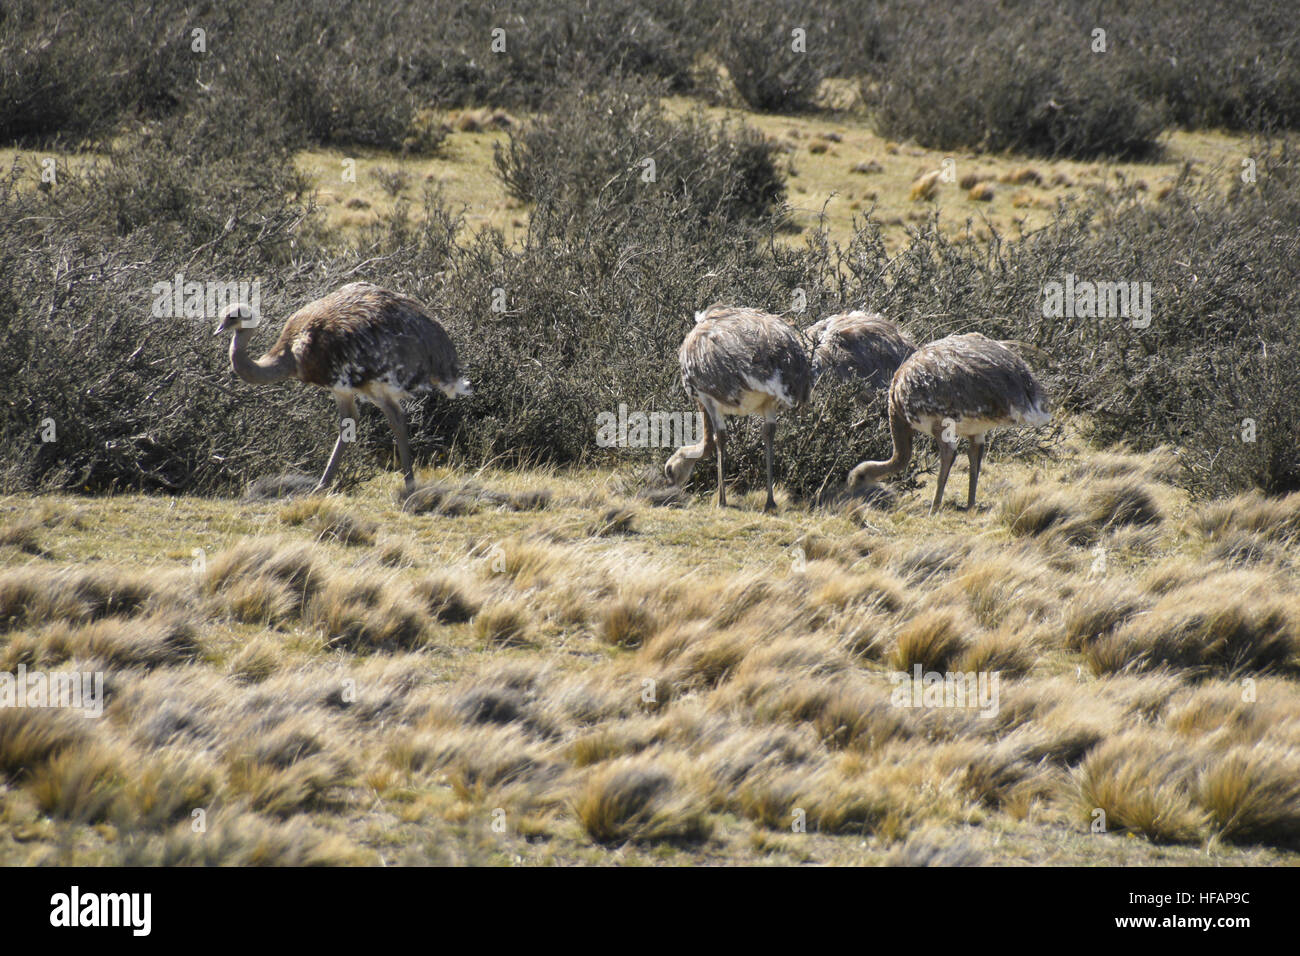 Ñandus (Darwin's or lesser rheas) feeding, Patagonia, Chile Stock Photo